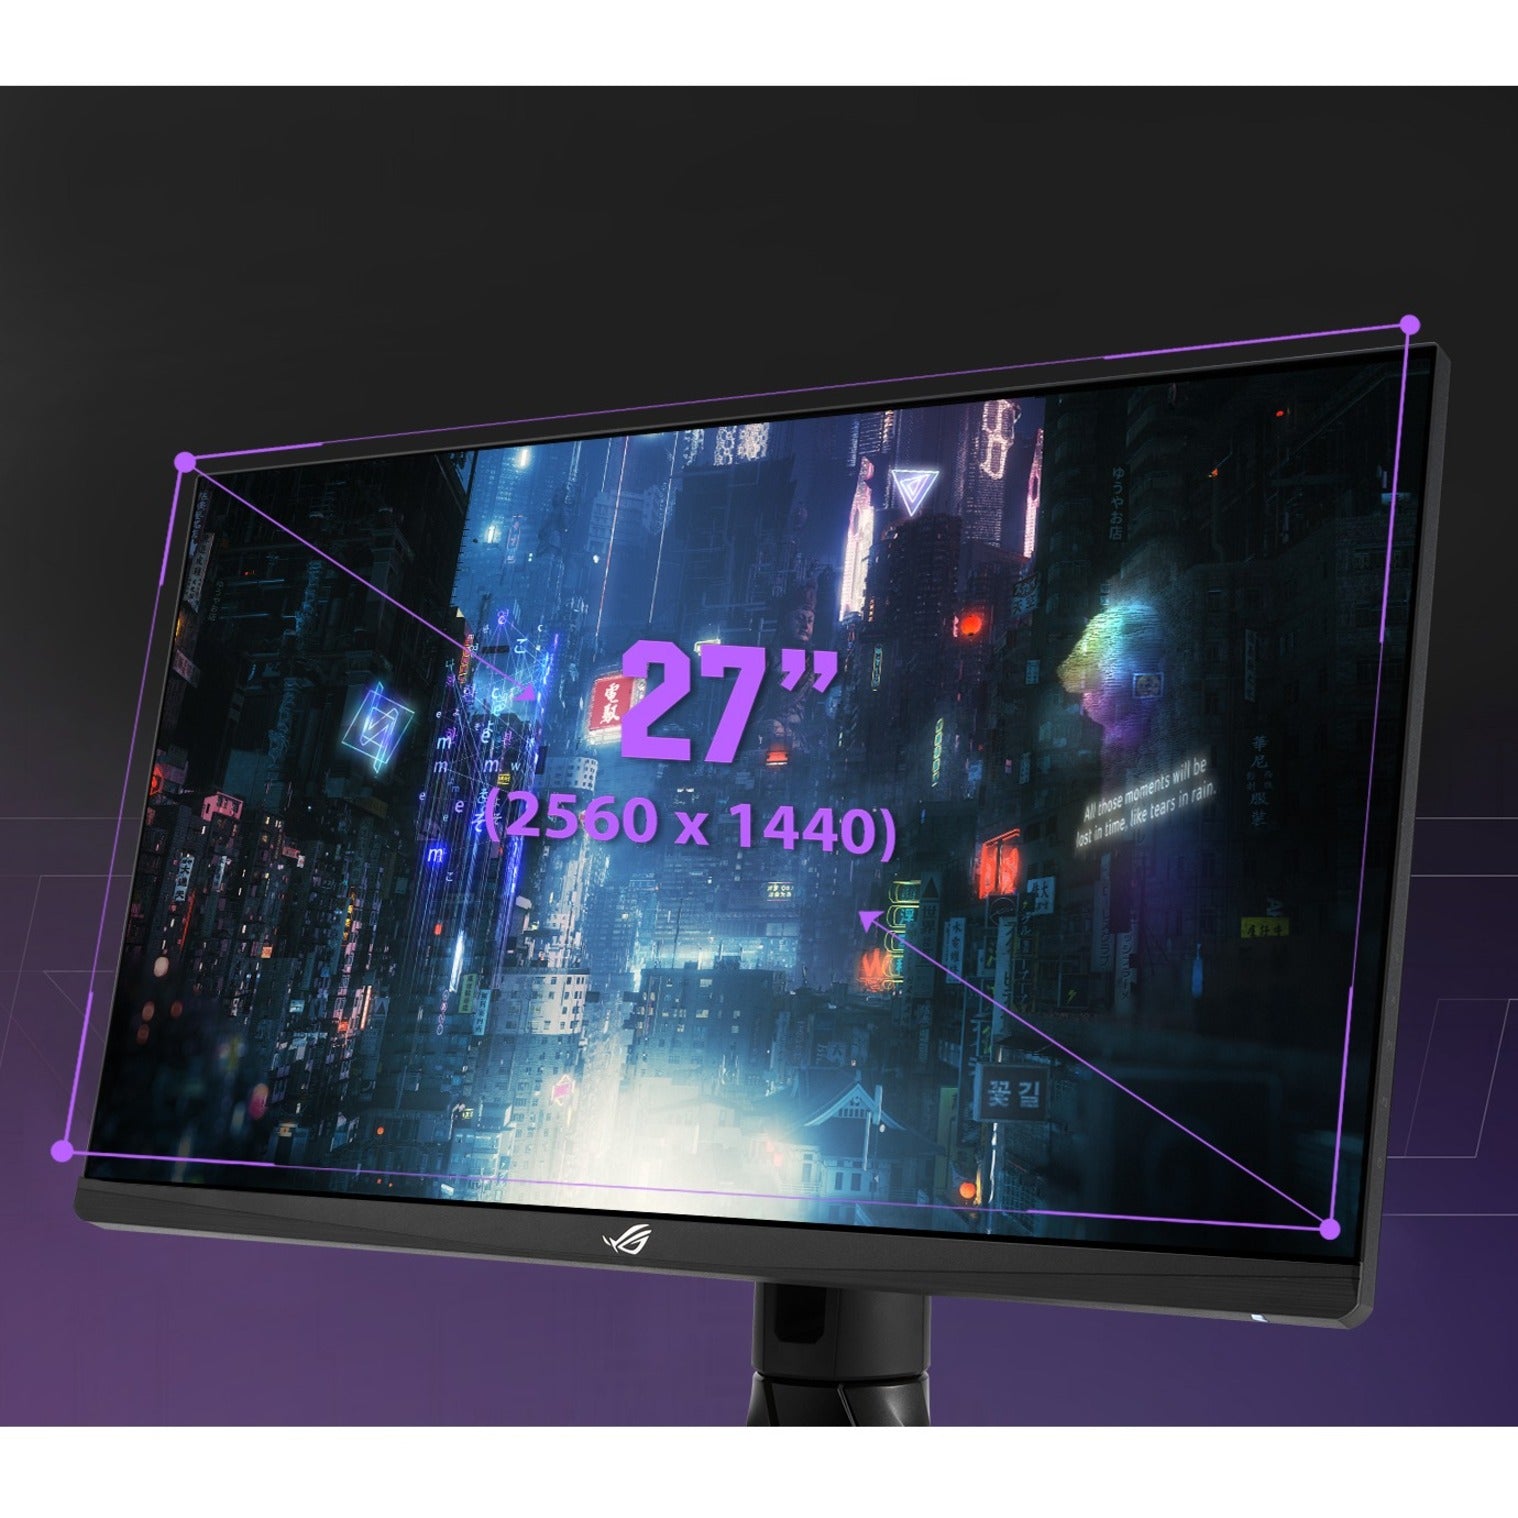 Asus ROG XG27AQMR Strix 27" Gaming LCD Monitor WQHD 300Hz FreeSync Premium Pro/G-sync Compatible